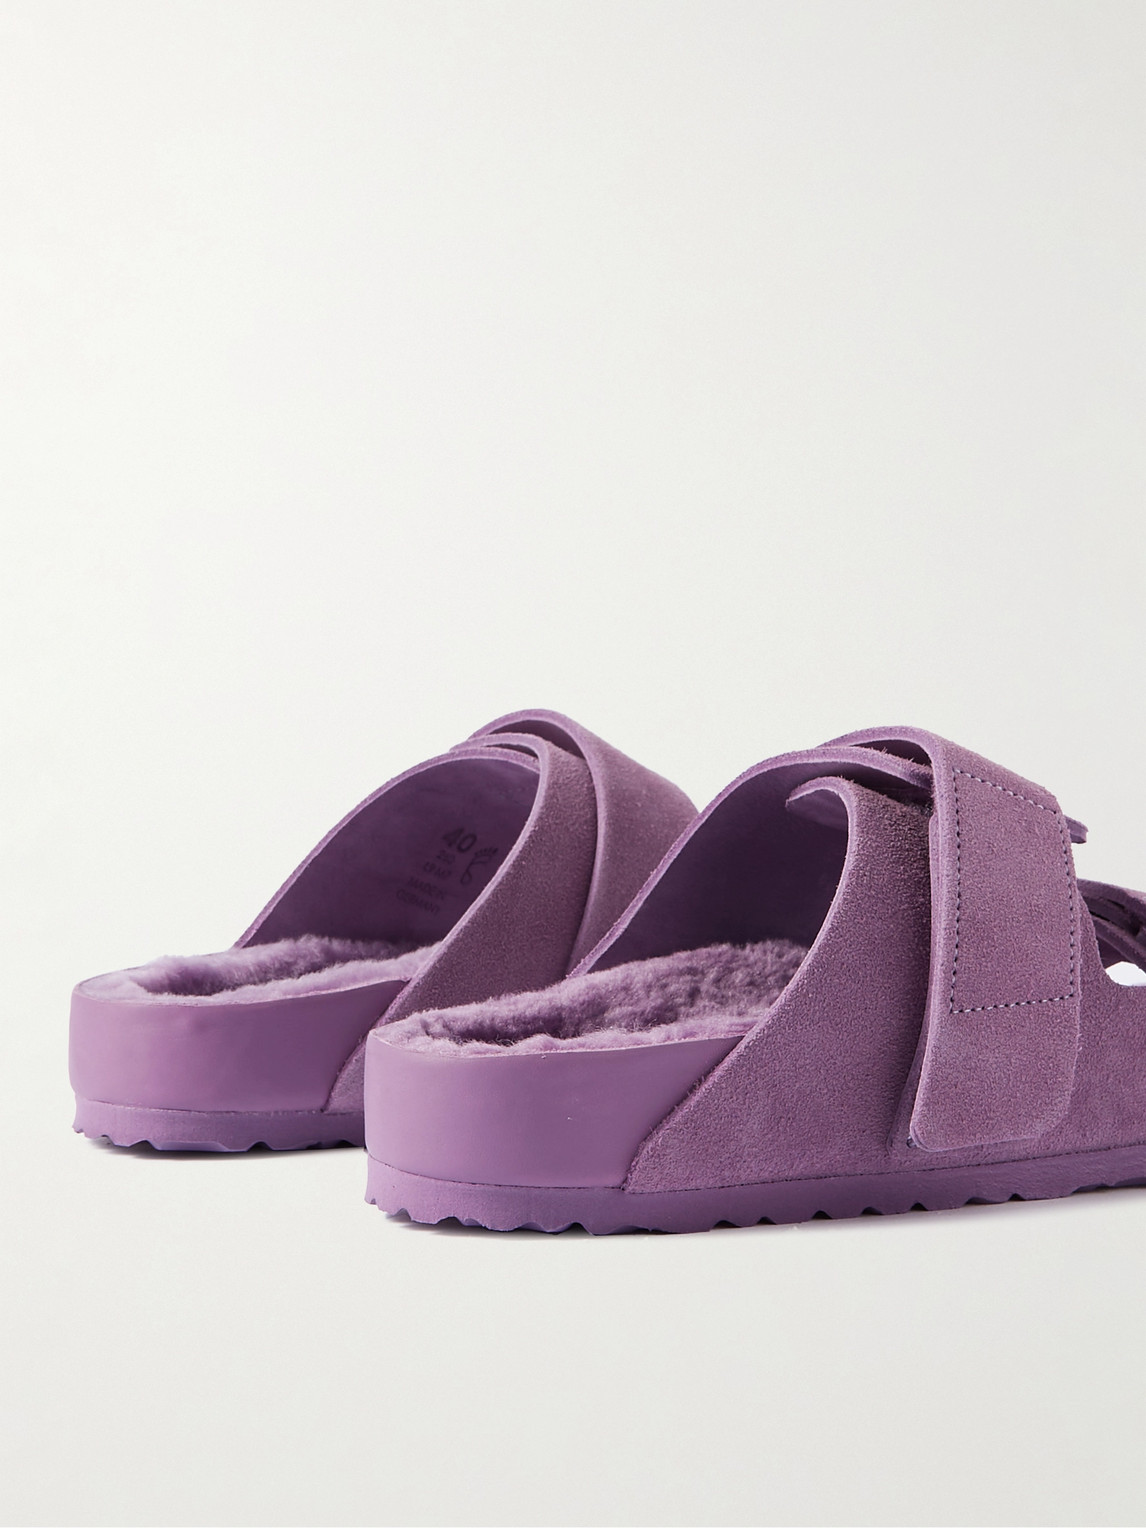 Shop Birkenstock Tekla Uji Shearling-lined Leather-trimmed Suede Sandals In Purple